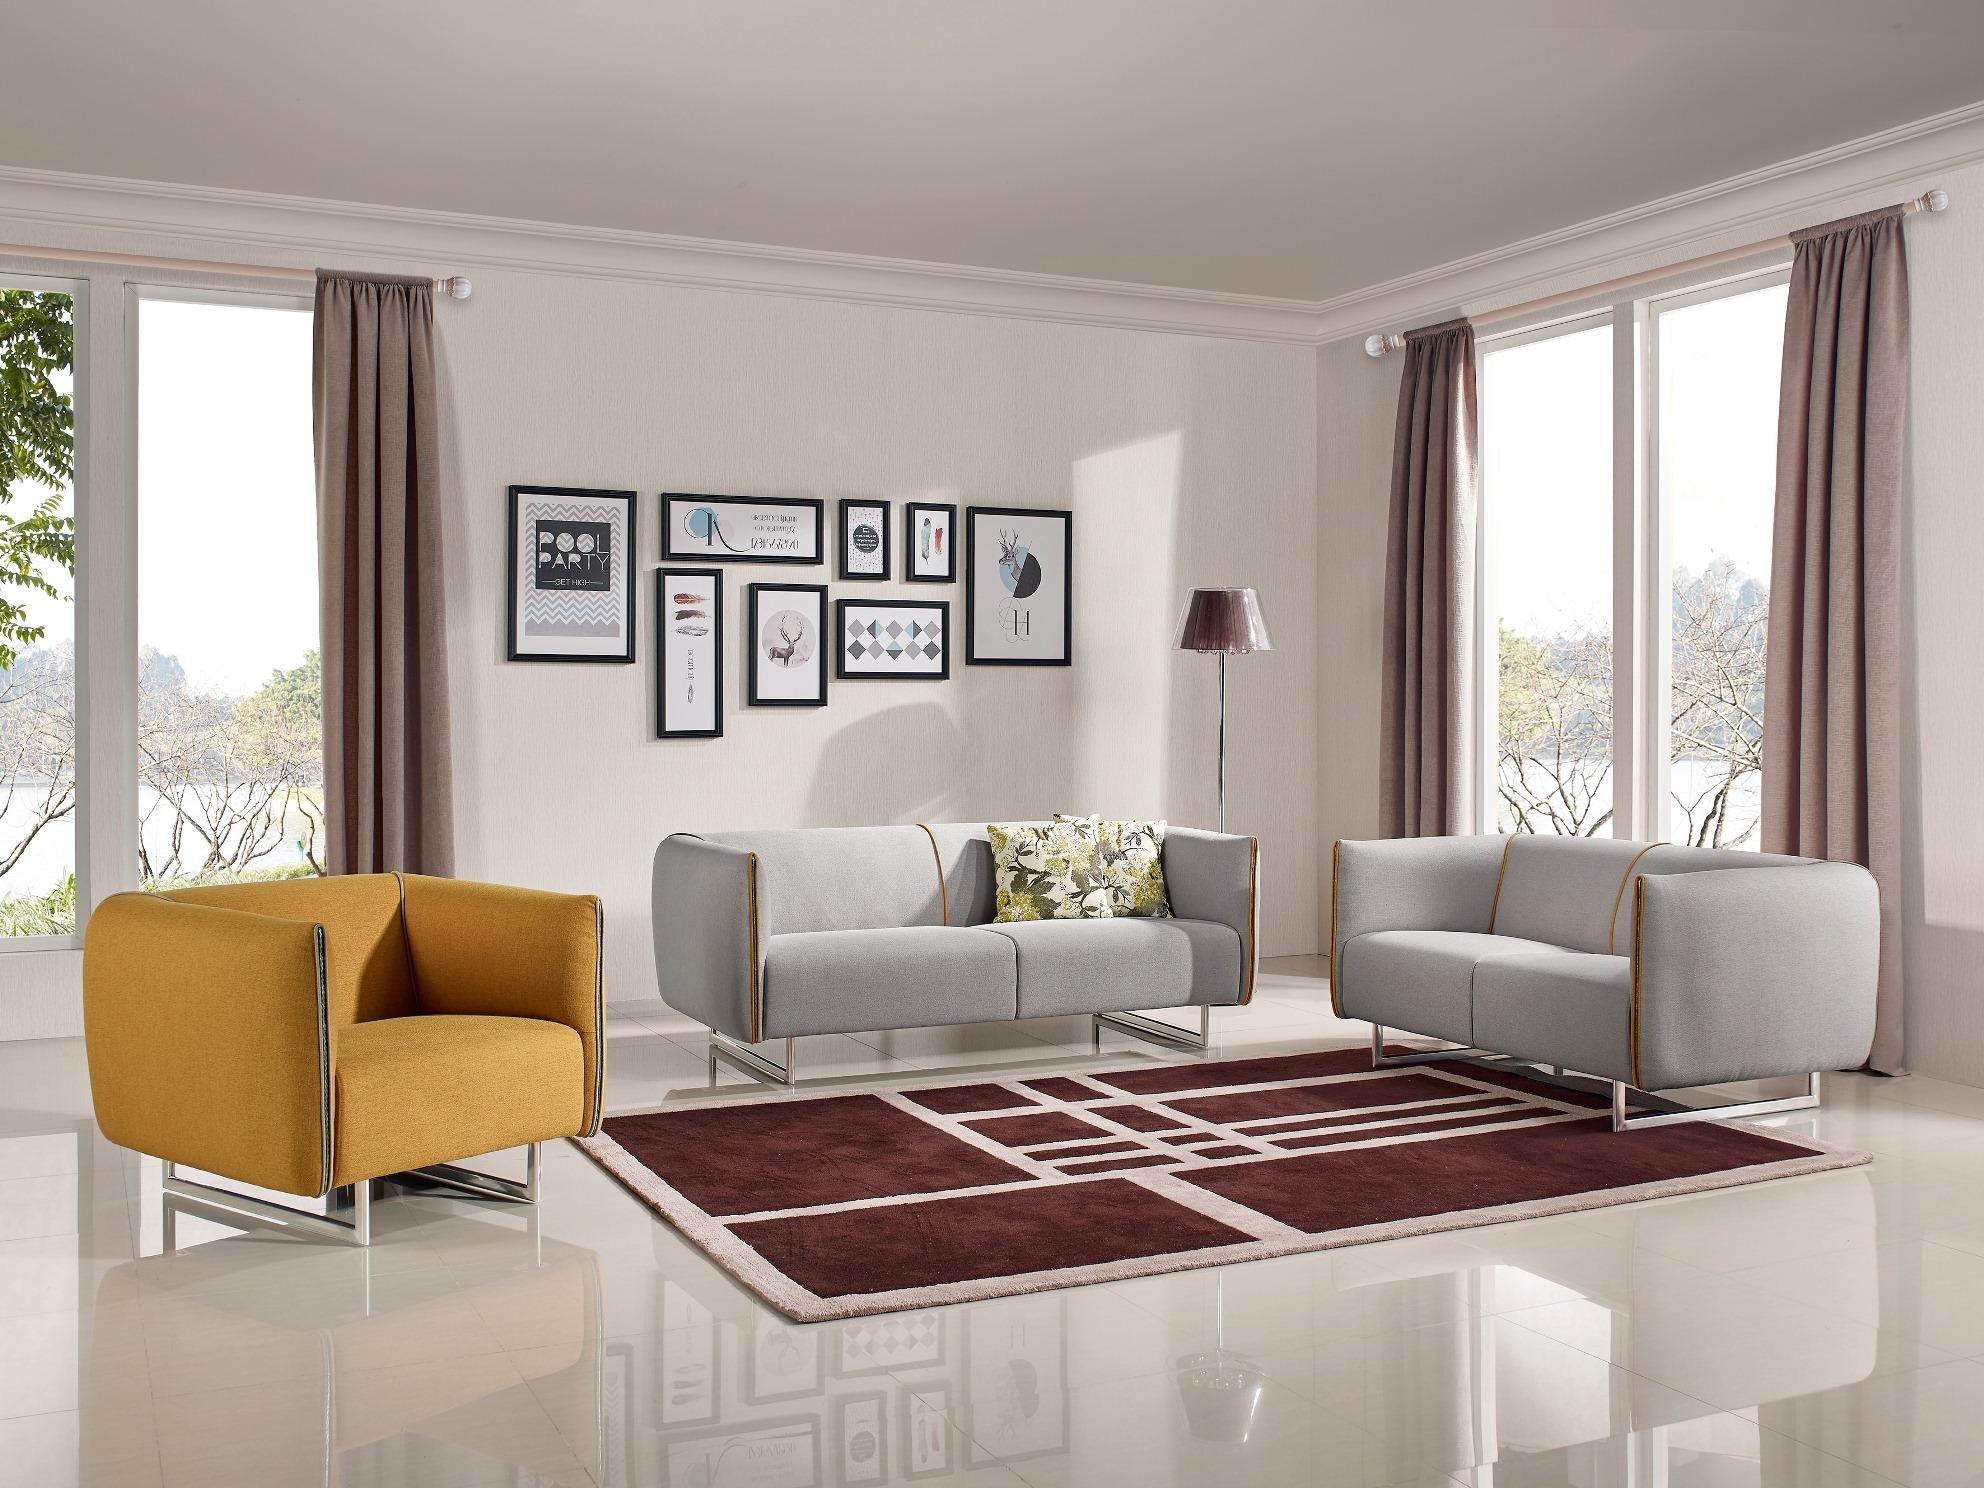 Contemporary, Modern Sofa Set Divani Casa Medora VGMB-1661-GRY in Yellow, Gray Fabric